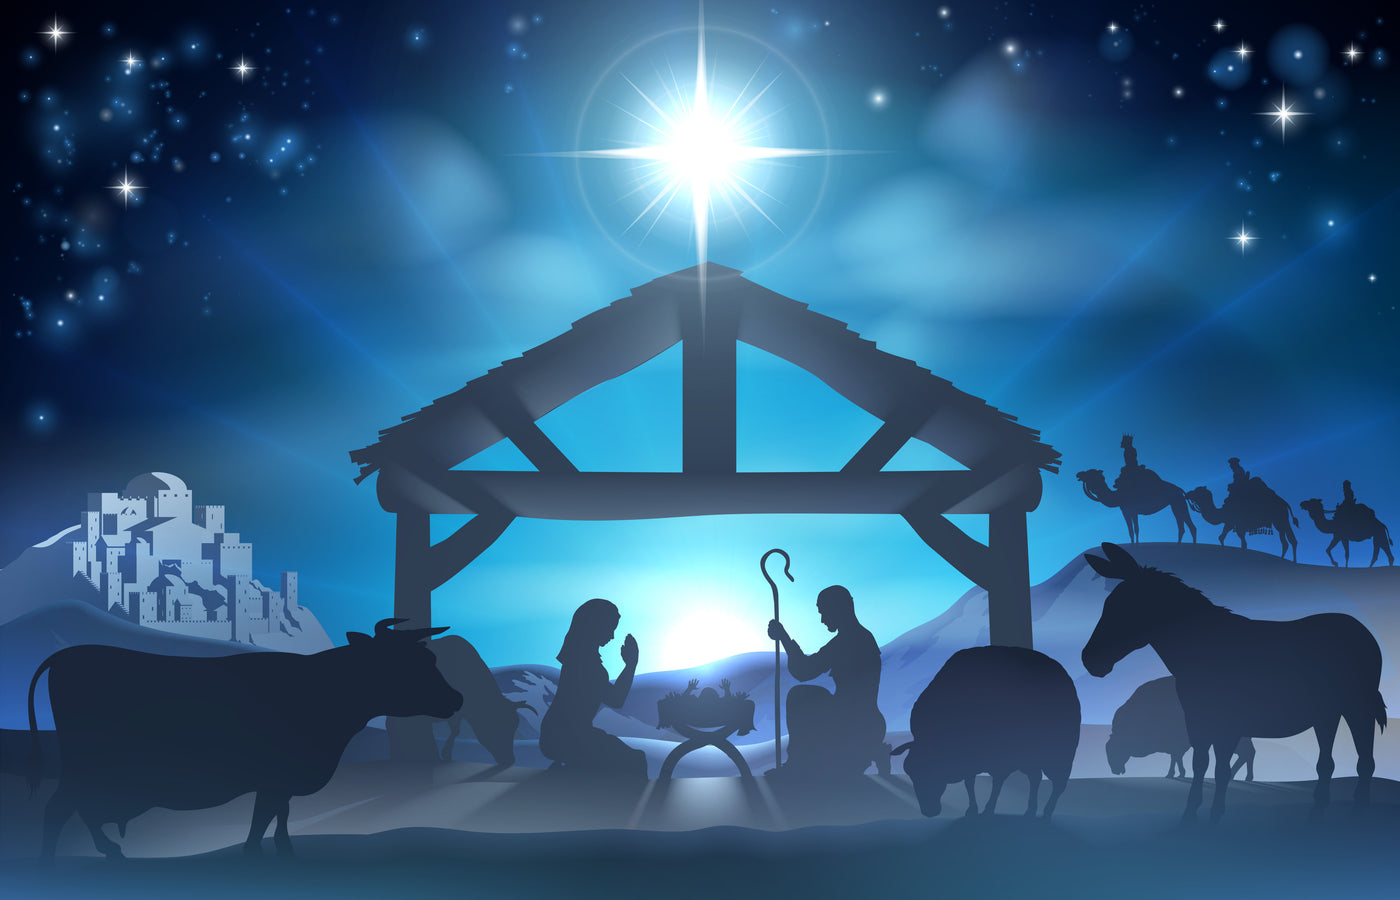 Christmas Nativity Scene Garage Door Cover Mural Banner Backdrop